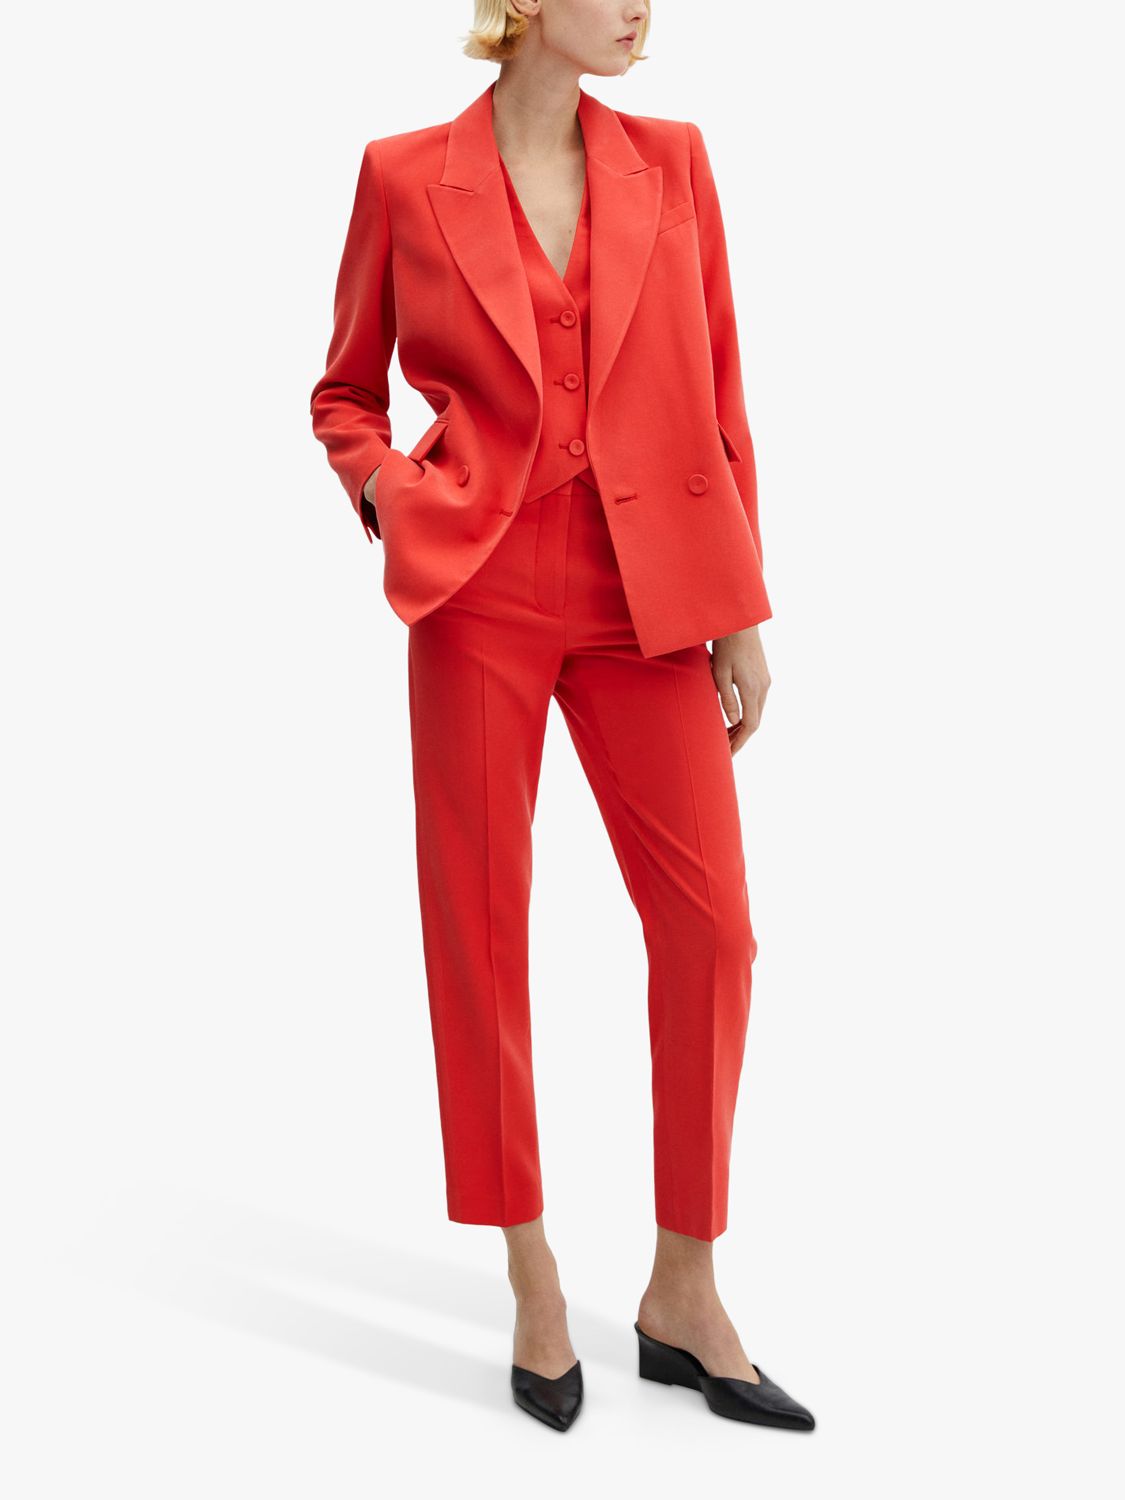 Mango Tempo Suit Waistcoat, Bright Red, L